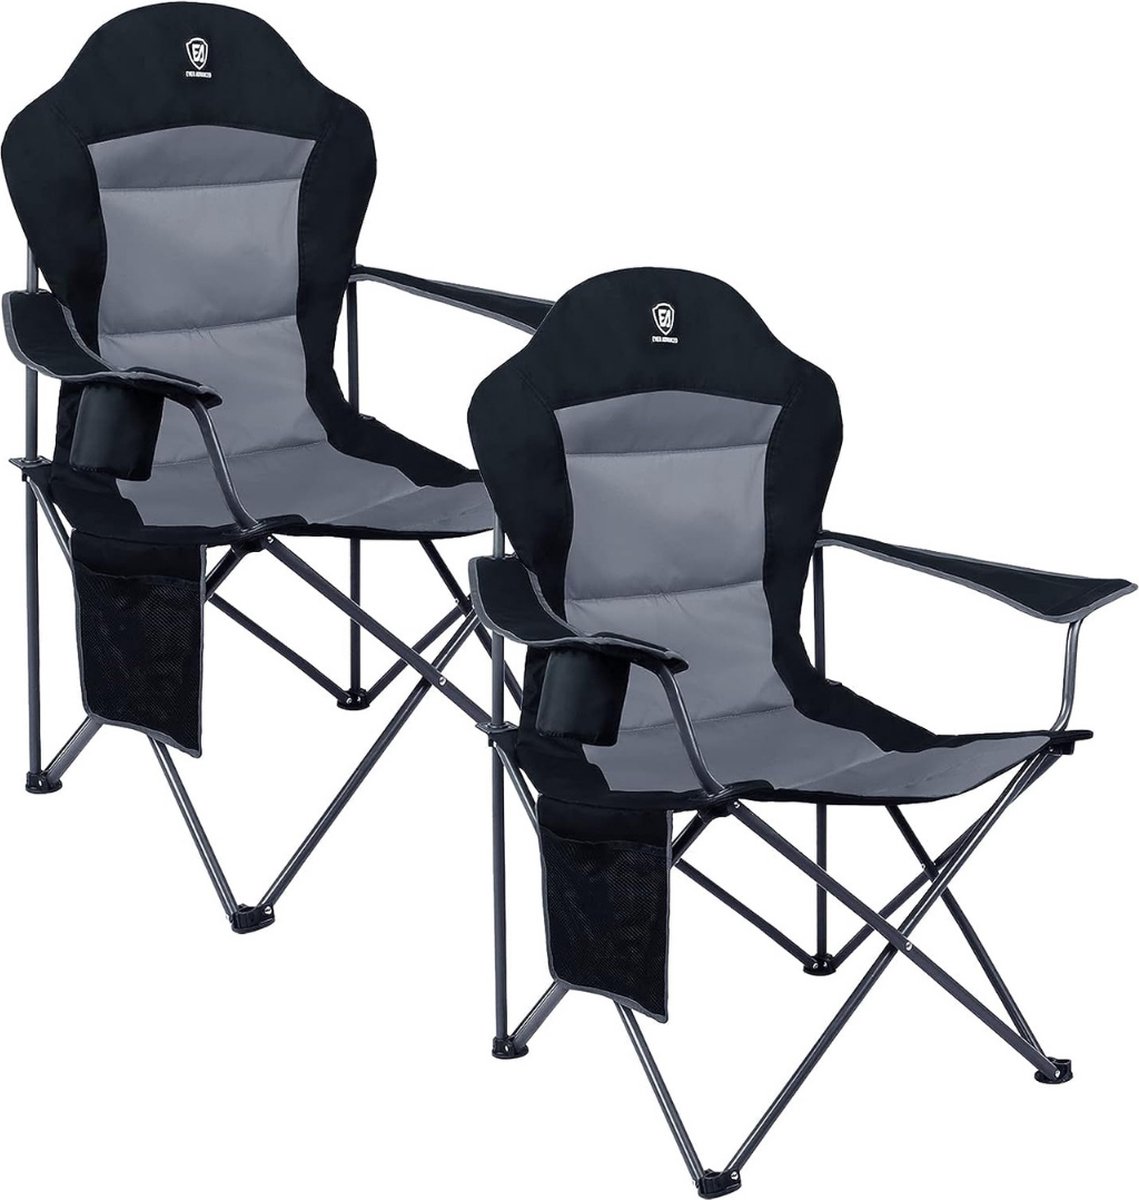 Luxe campingstoel, opvouwbaar, 150 kg belastbaar, ultragroot, met hoge rugleuning, comfortabel kussen, klapstoel, camping, tuin, balkon, strand, campingstoel, stoel, tuinstoel, visstoel